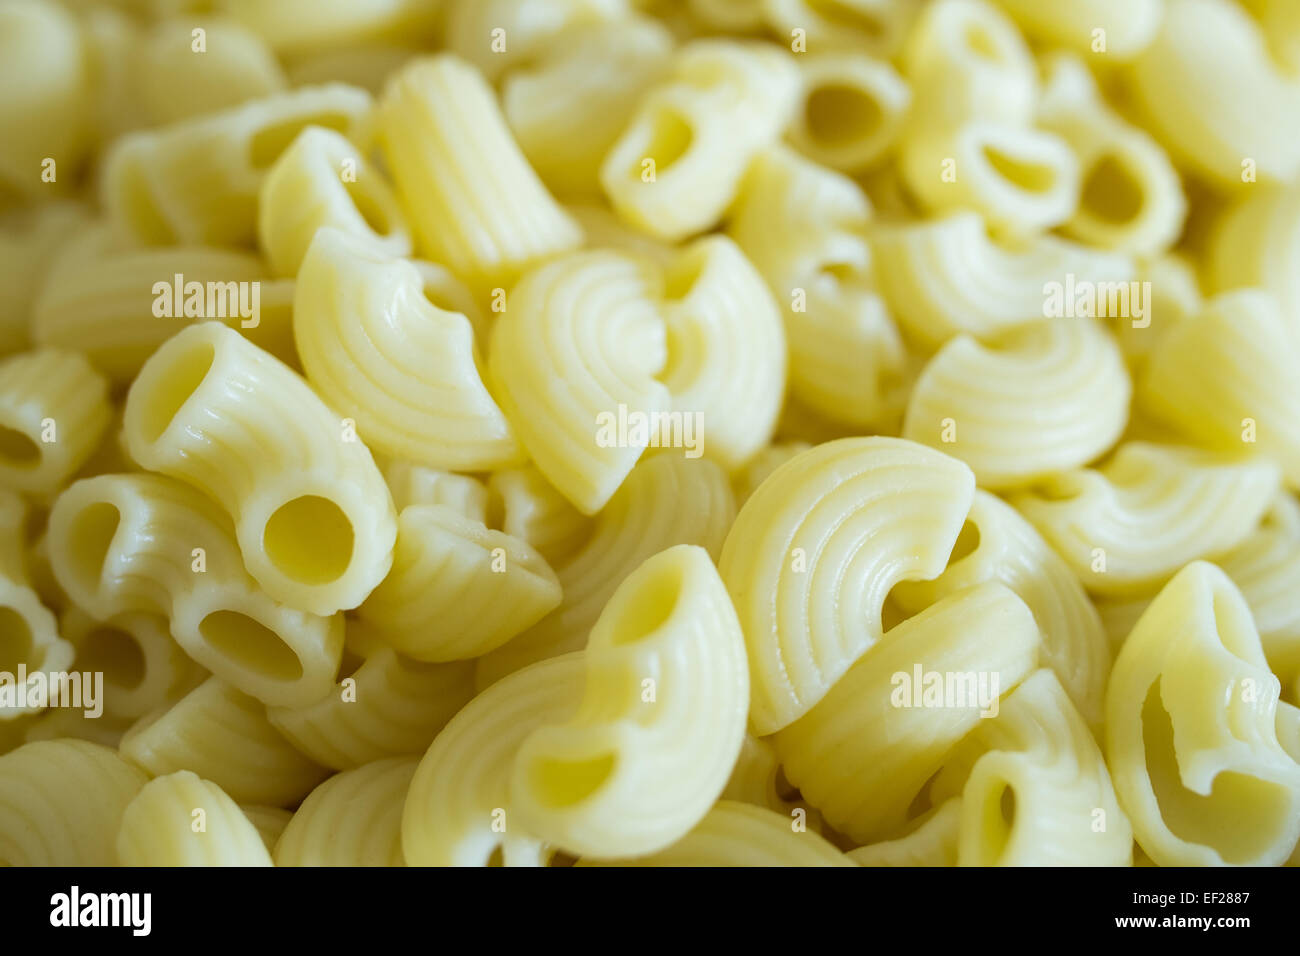 macaroni bollito Foto Stock